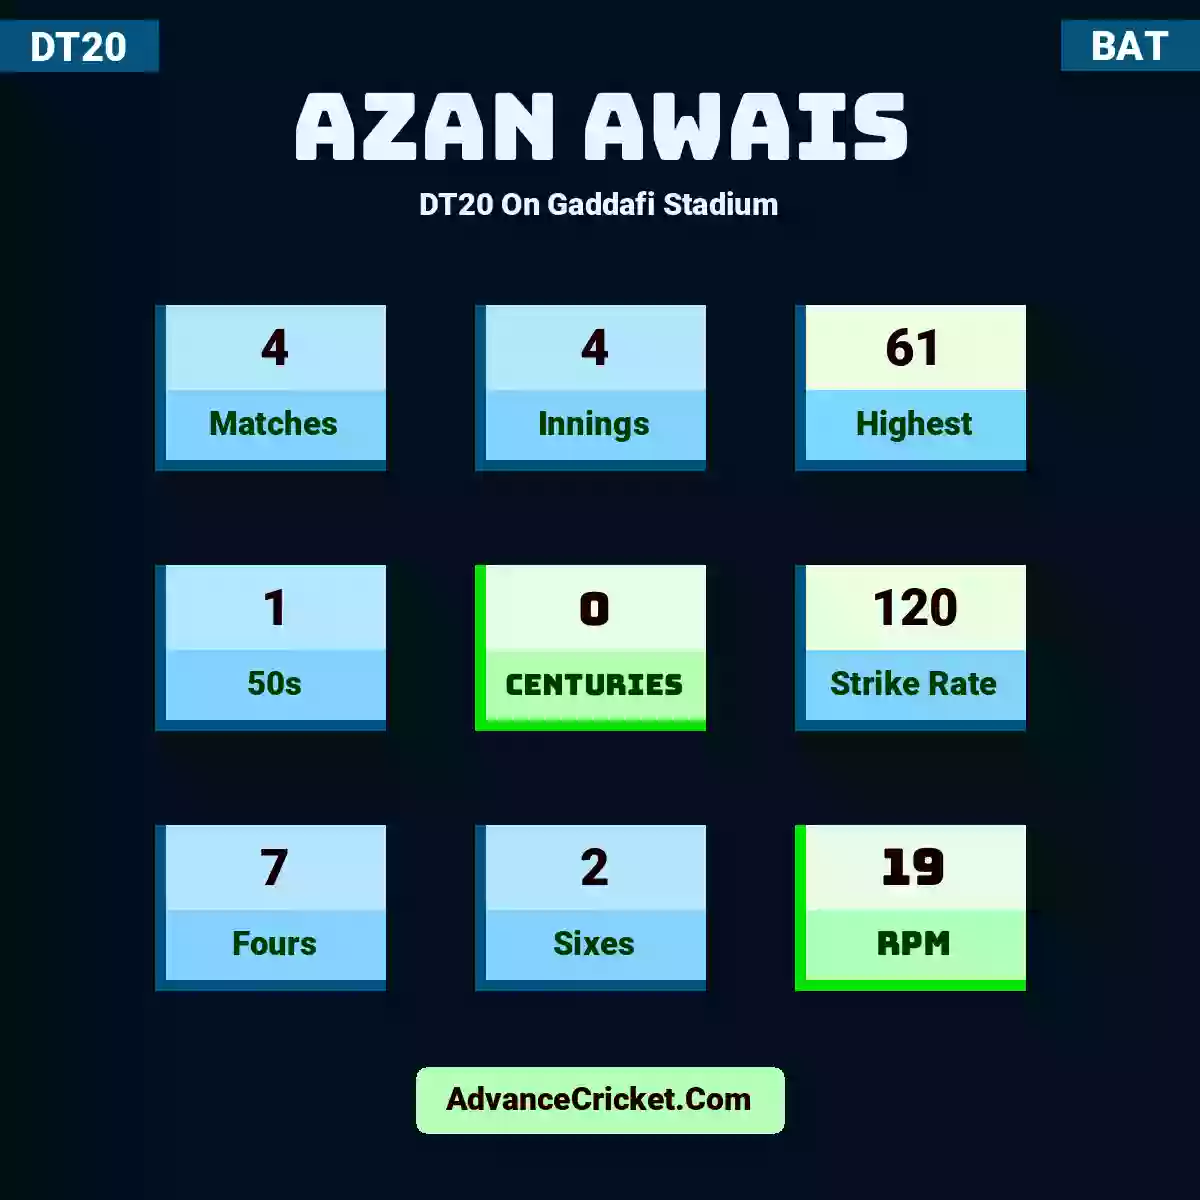 Azan Awais DT20  On Gaddafi Stadium, Azan Awais played 4 matches, scored 61 runs as highest, 1 half-centuries, and 0 centuries, with a strike rate of 120. A.Awais hit 7 fours and 2 sixes, with an RPM of 19.